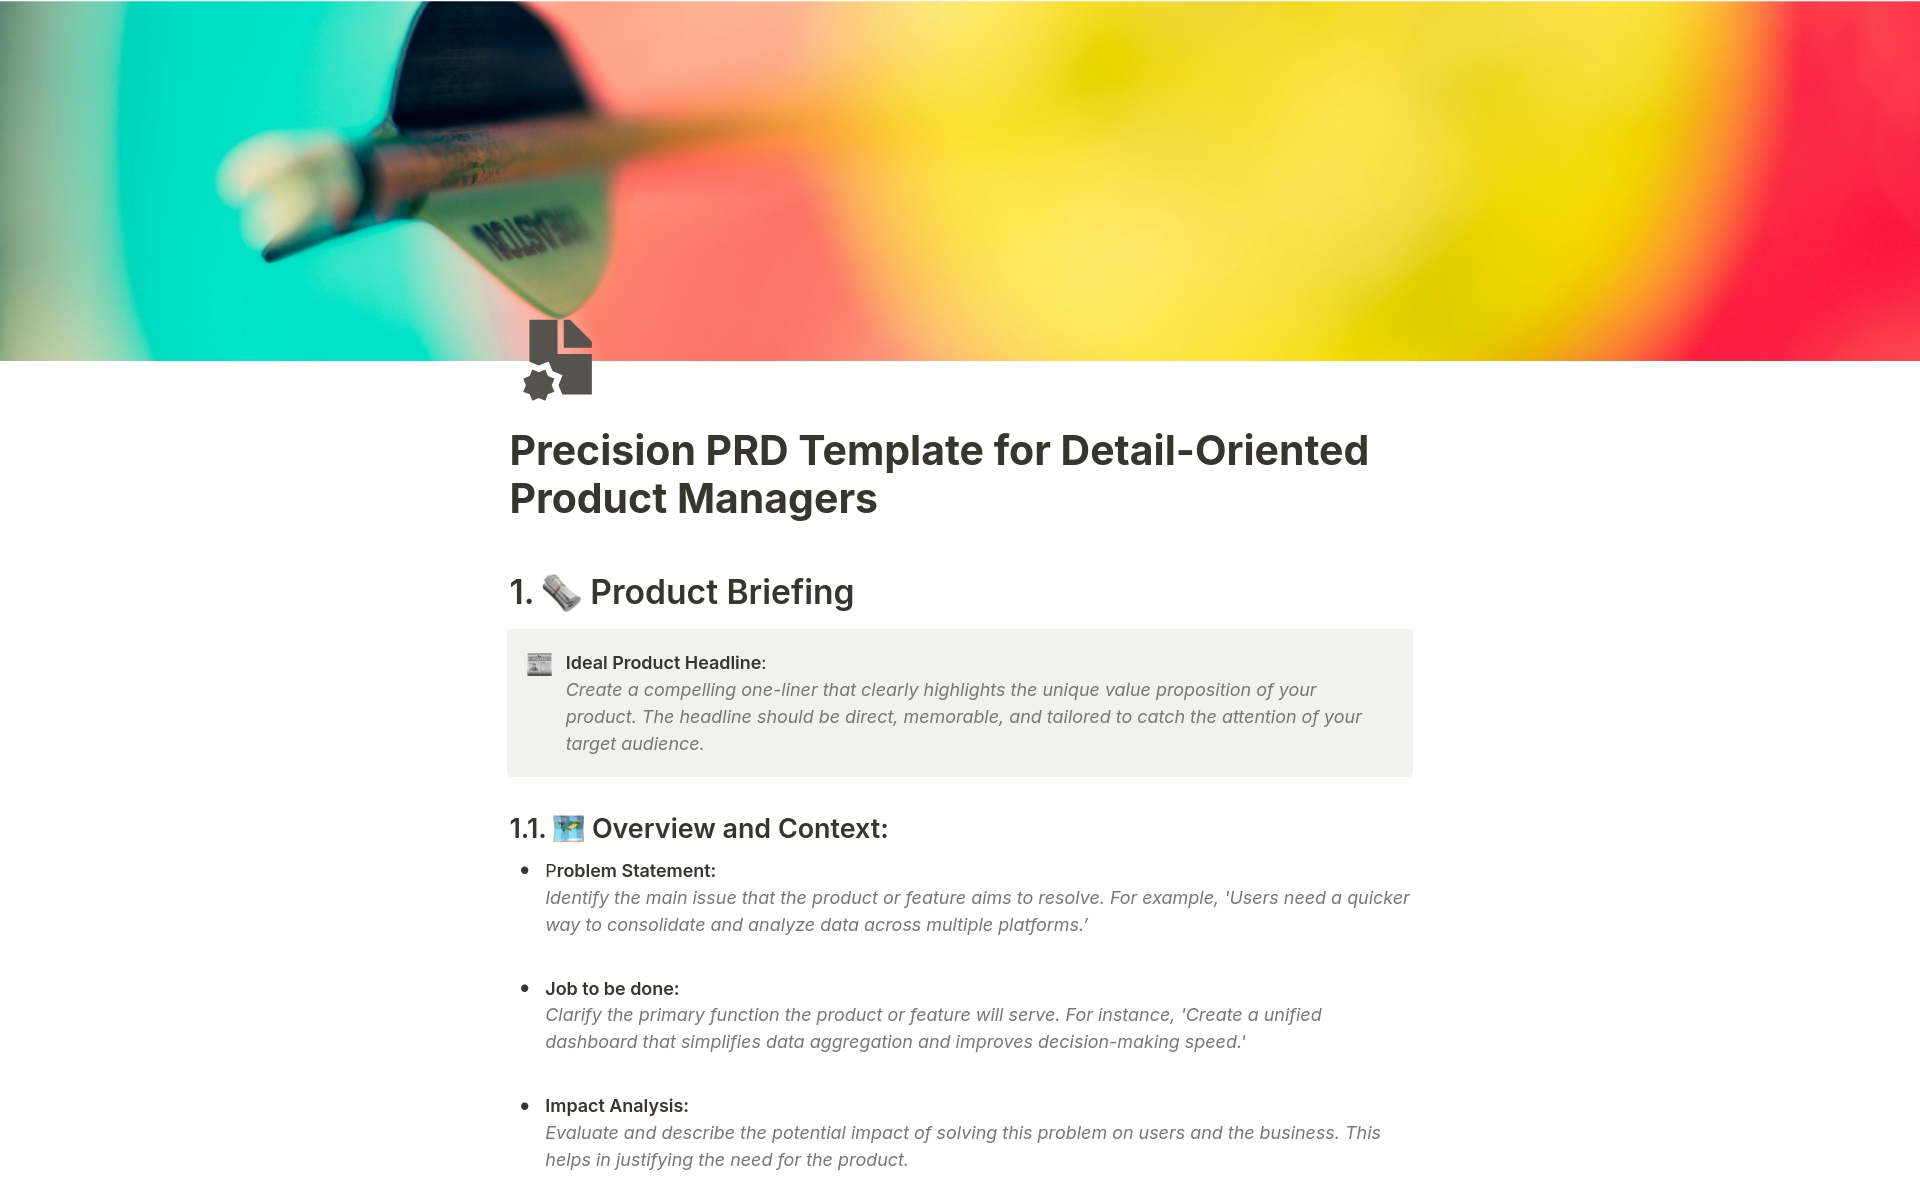 Vista previa de plantilla para Precision PRD Template for Detail-Oriented PMs